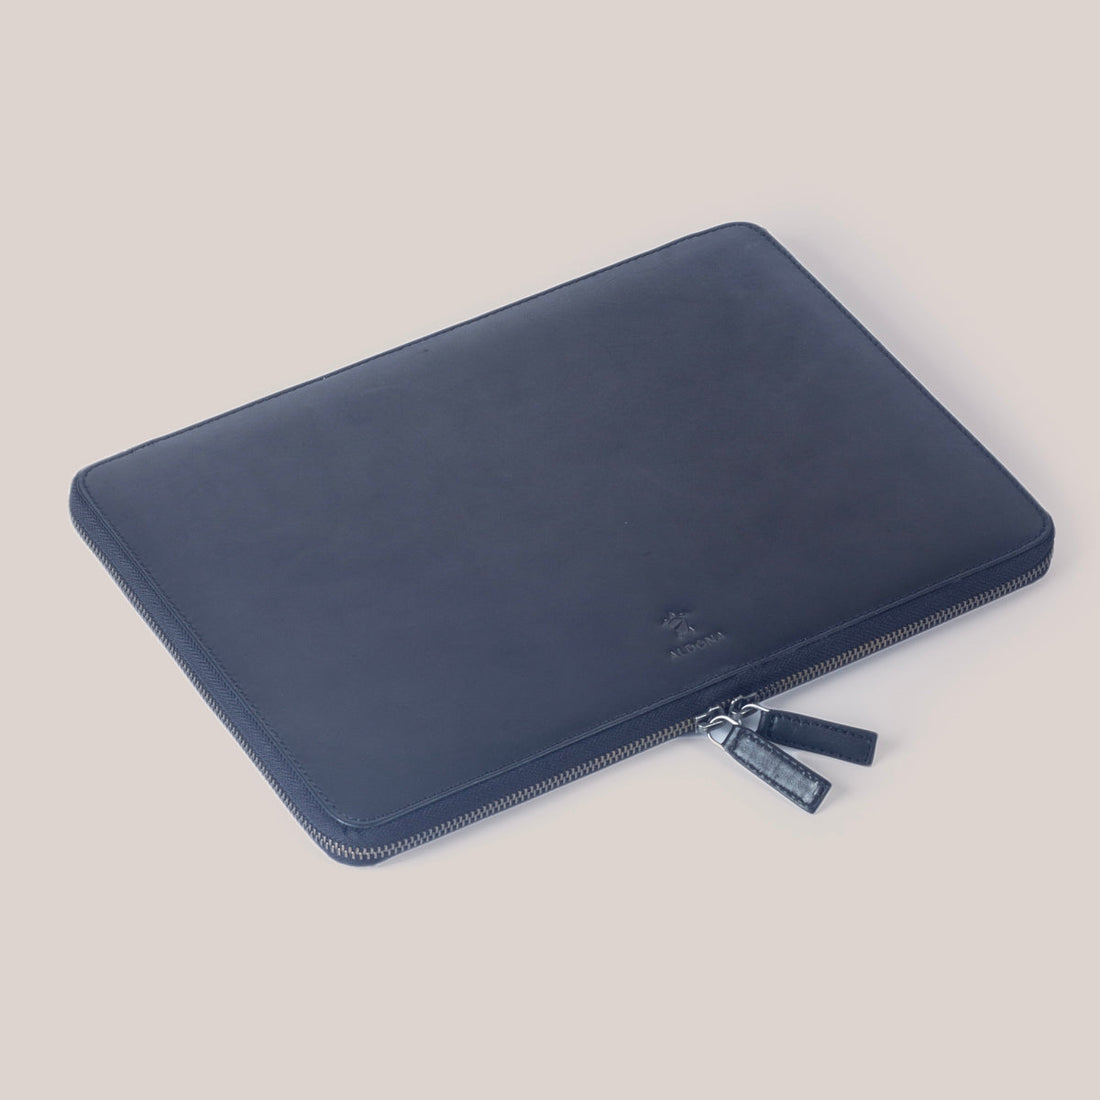 Microsoft Surface Book 13.5 Zippered Laptop Case - Cognac